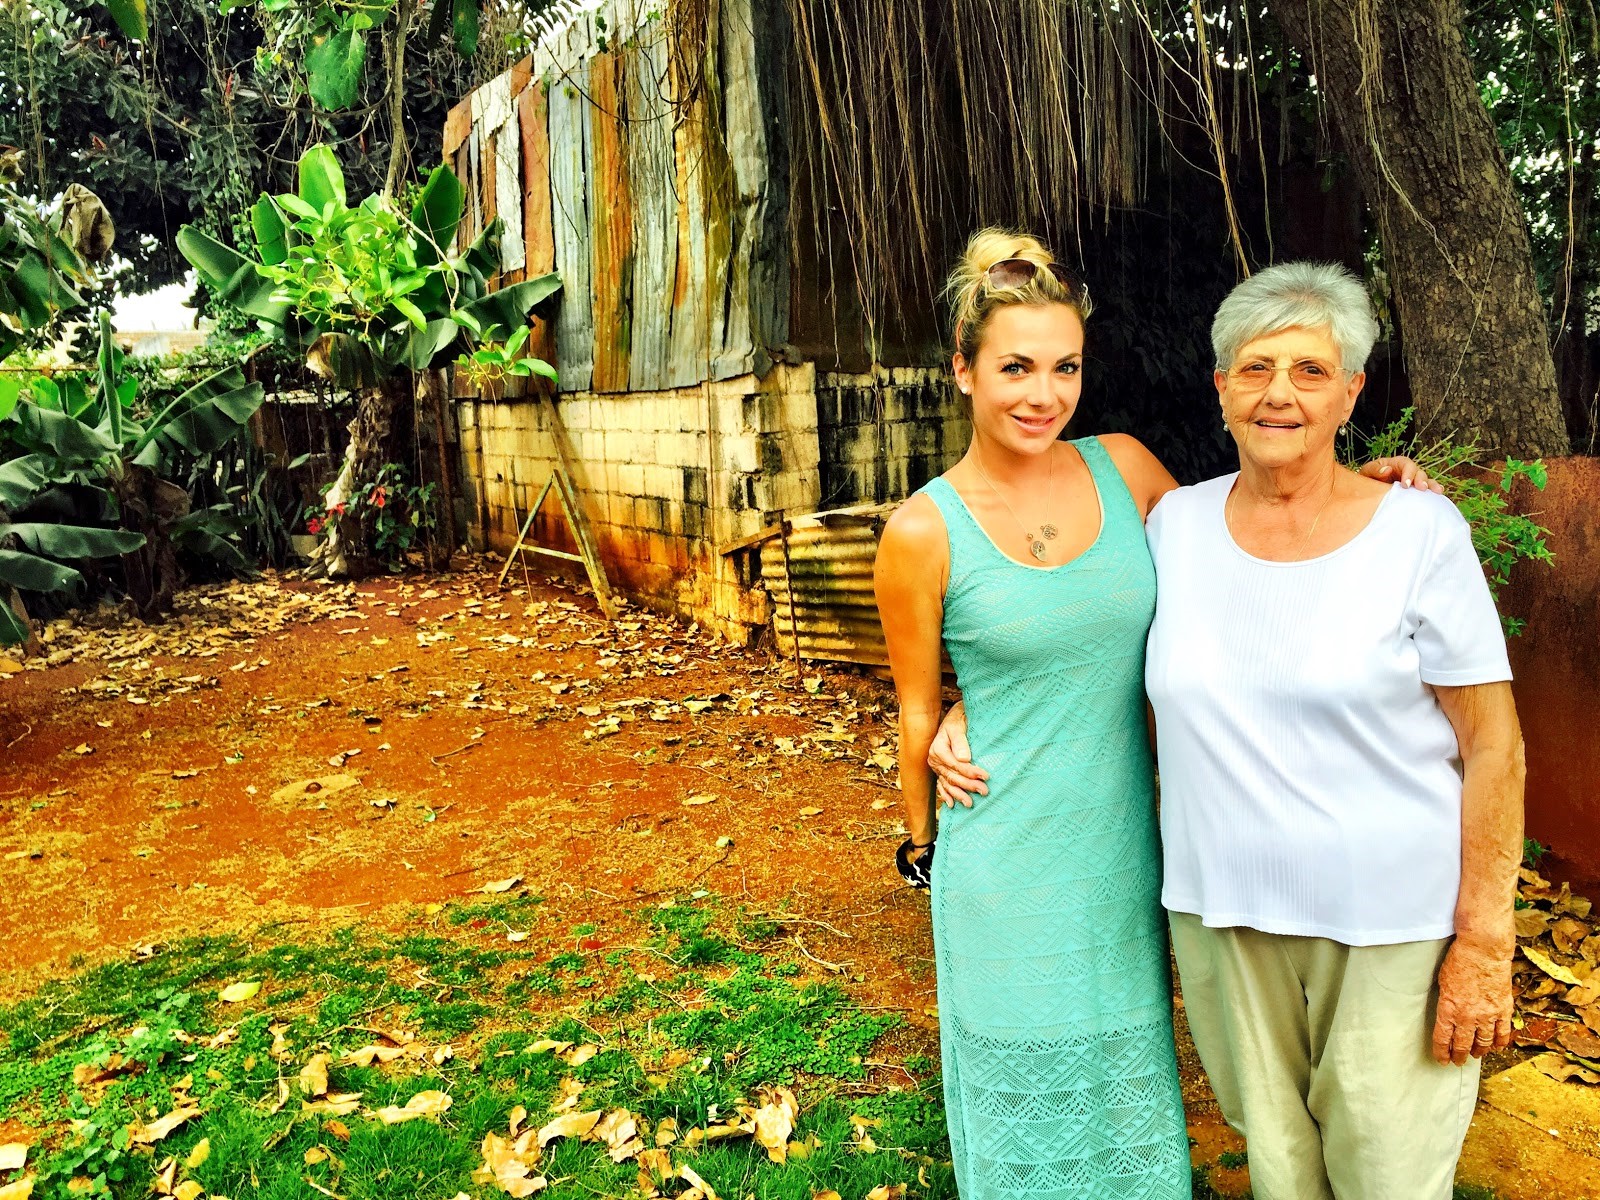 Alyssa and cousin in Cuba